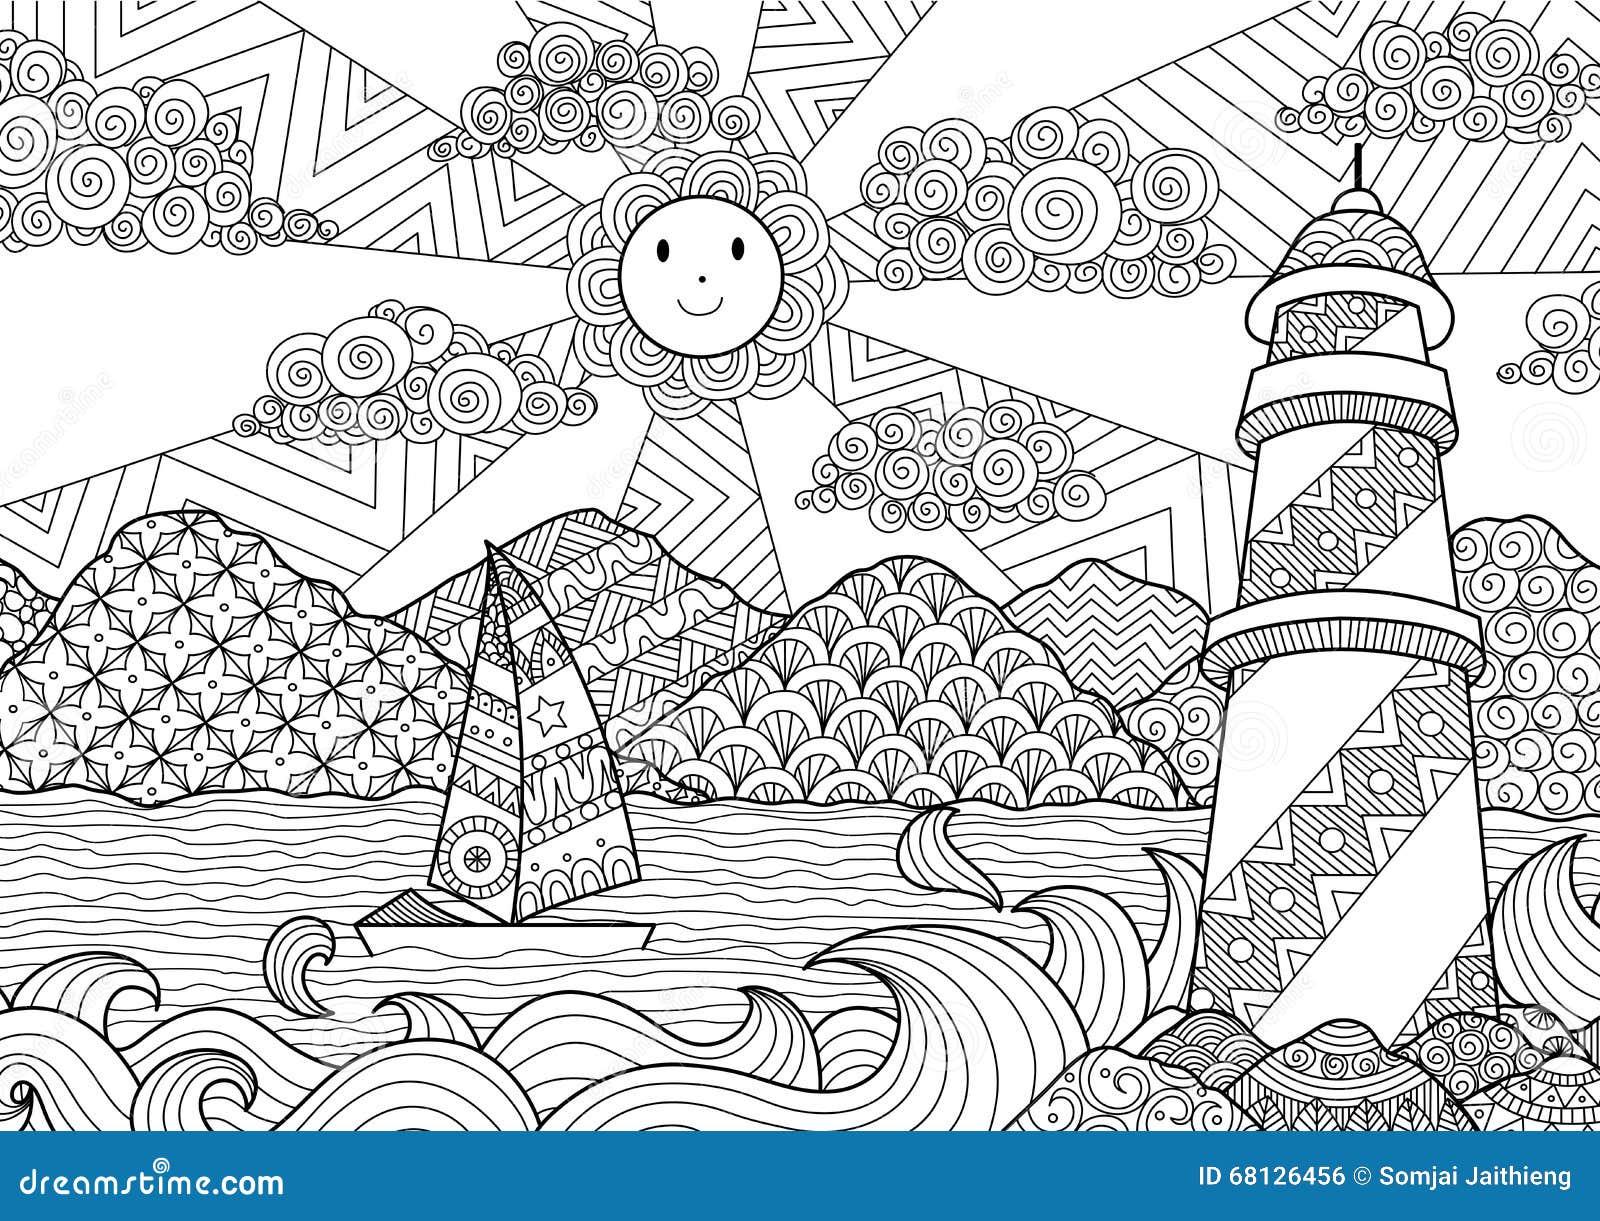 Pencil design drawing | Pencil design, Designs to draw, Drawings-saigonsouth.com.vn